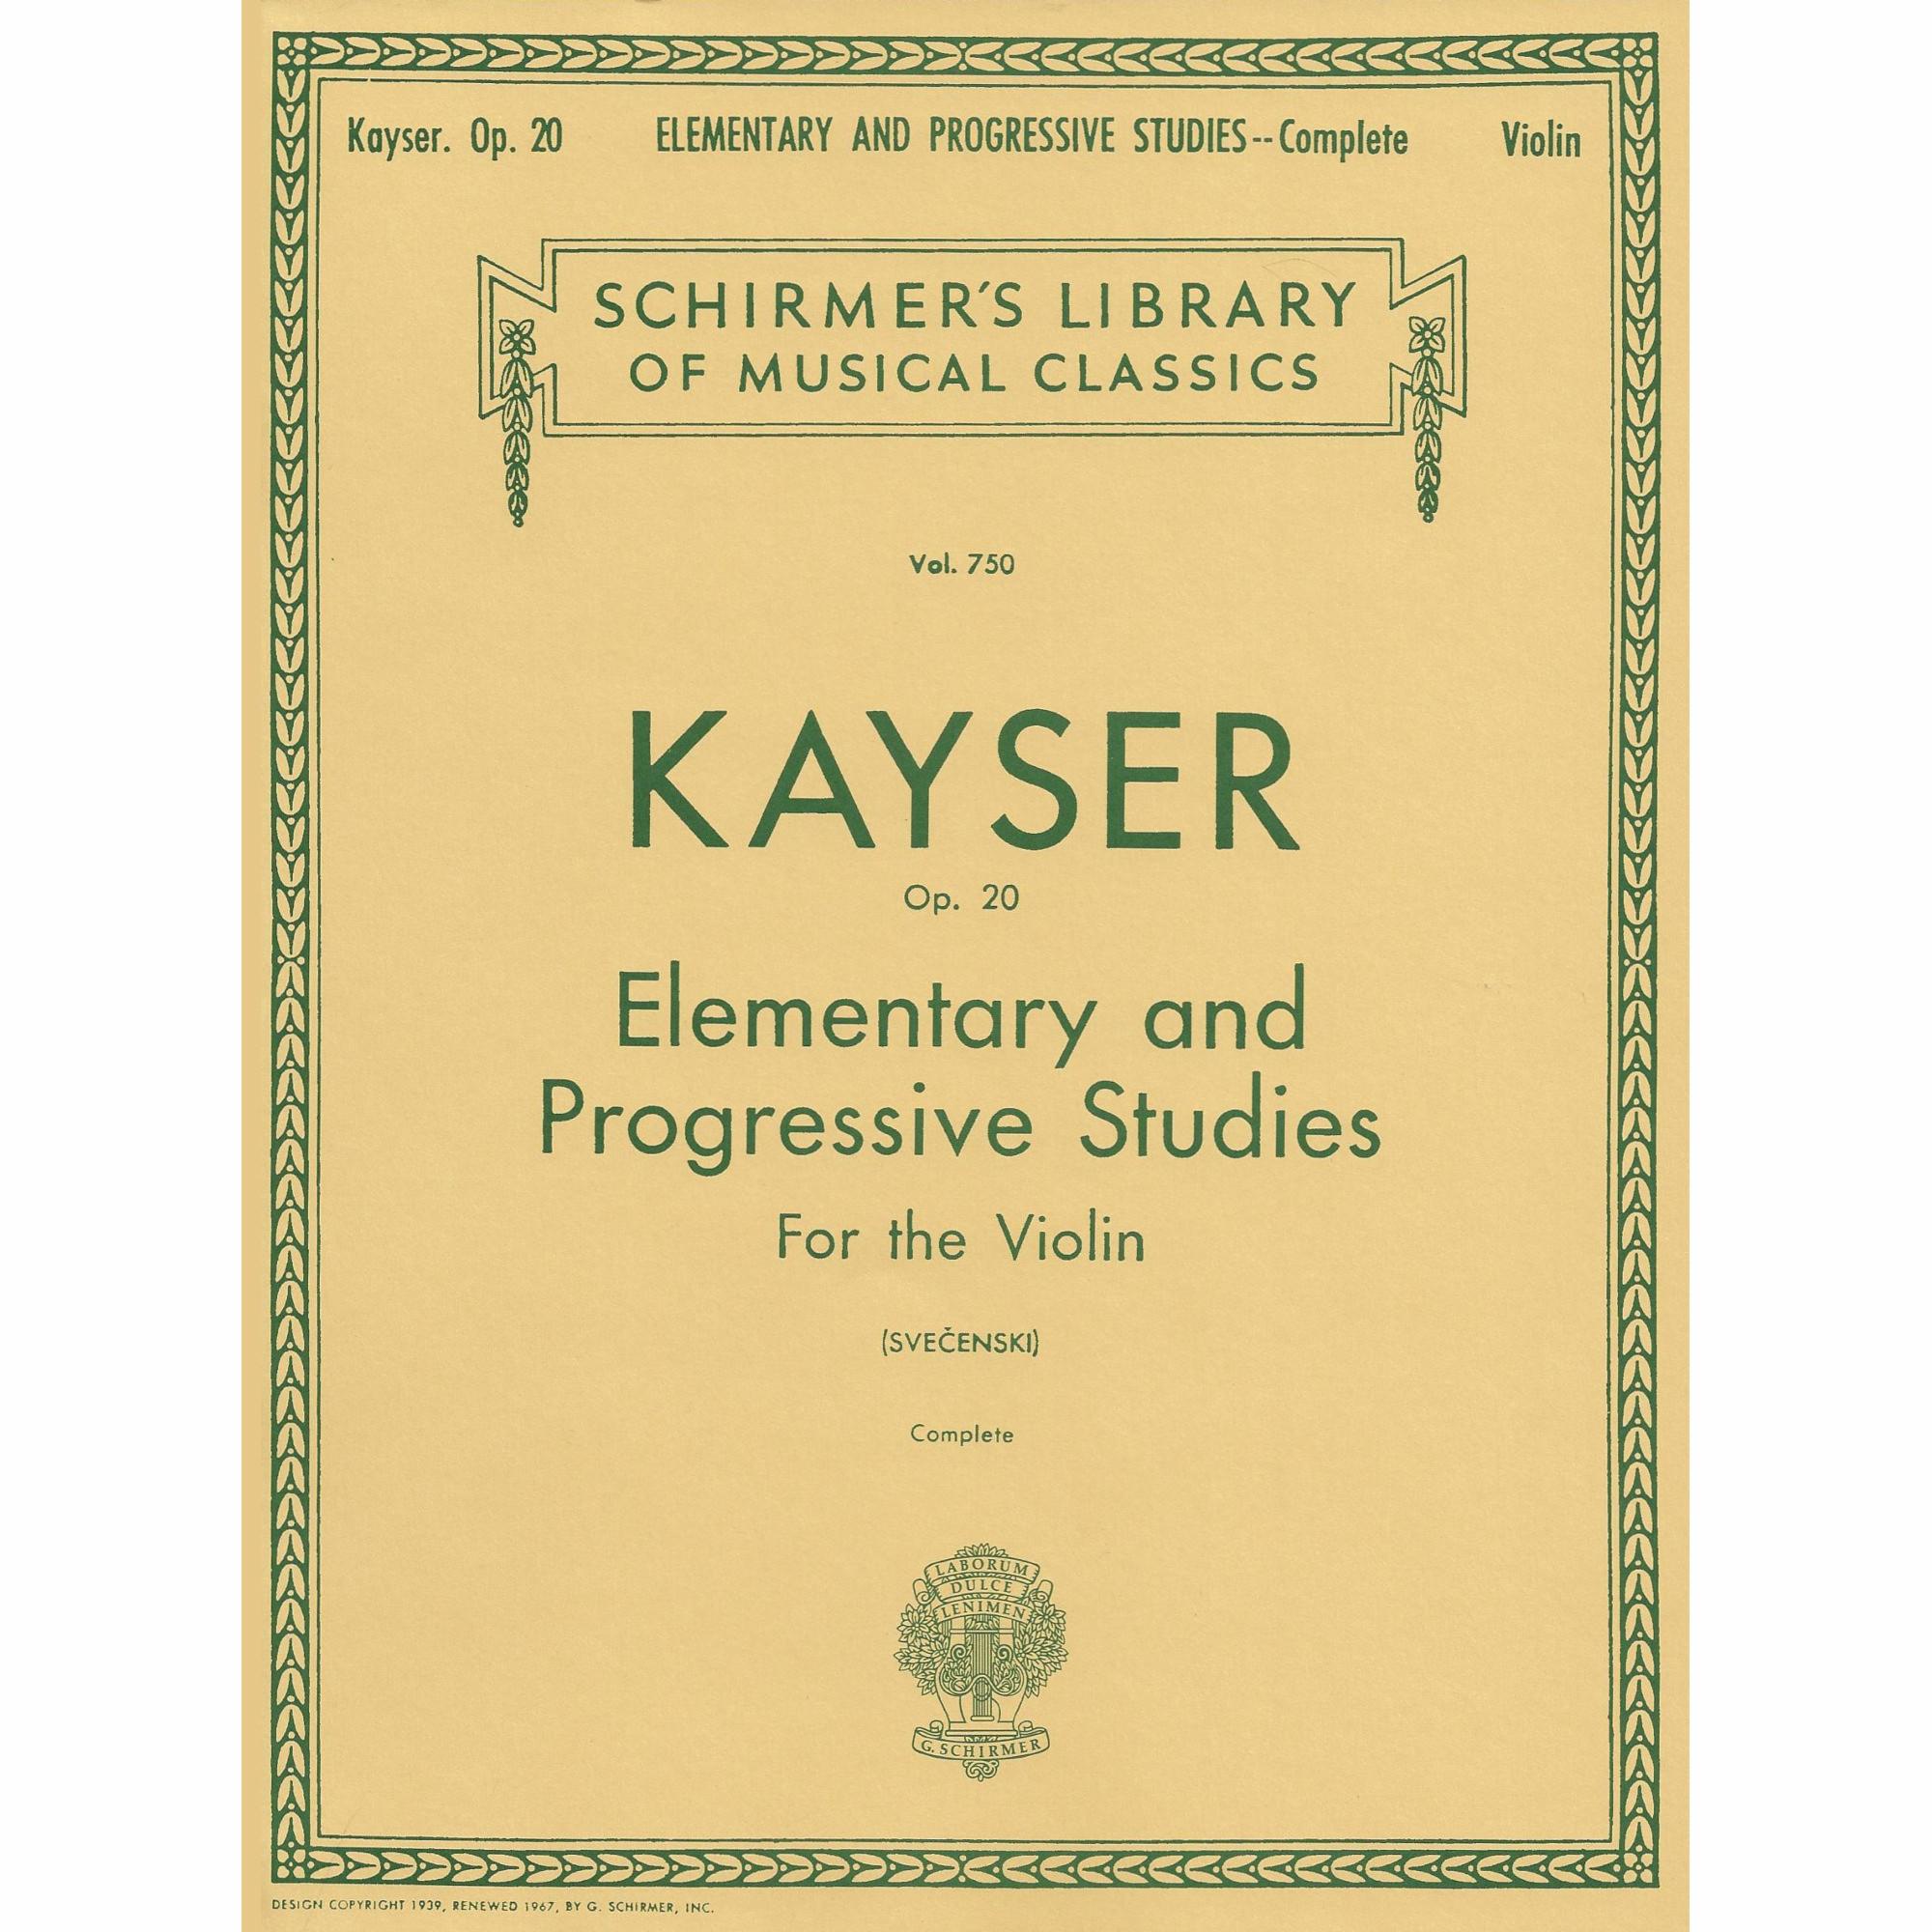 Kayser -- Elementary and Progressive Studies, Op. 20 for Violin